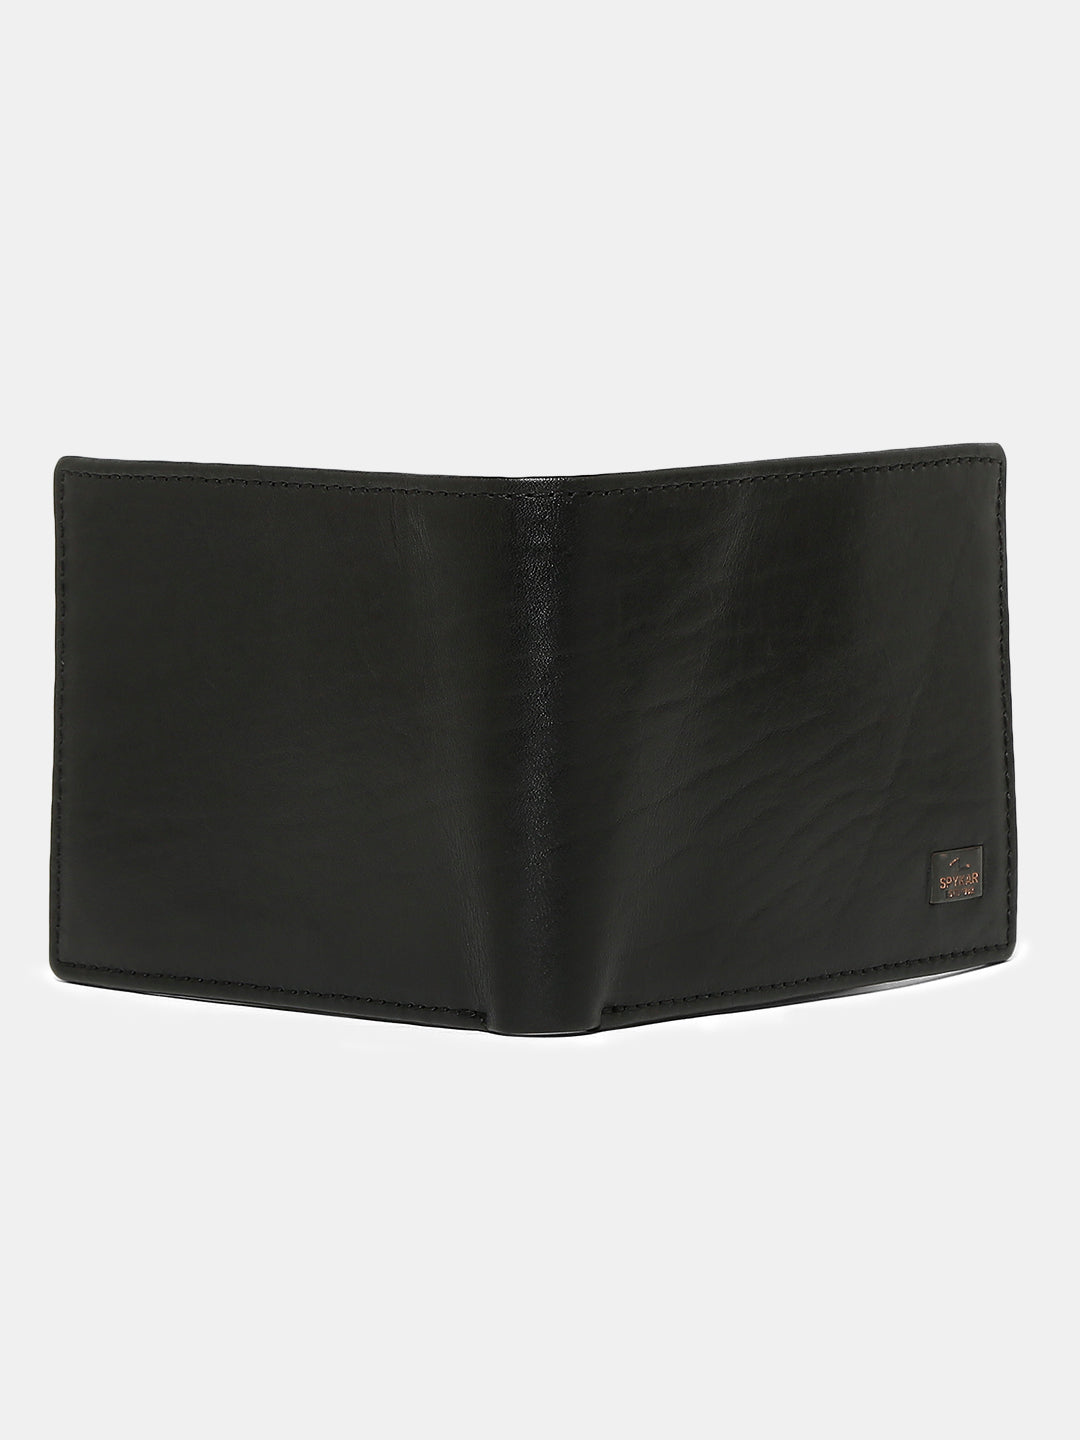 Spykar Men Black Leather Wallet